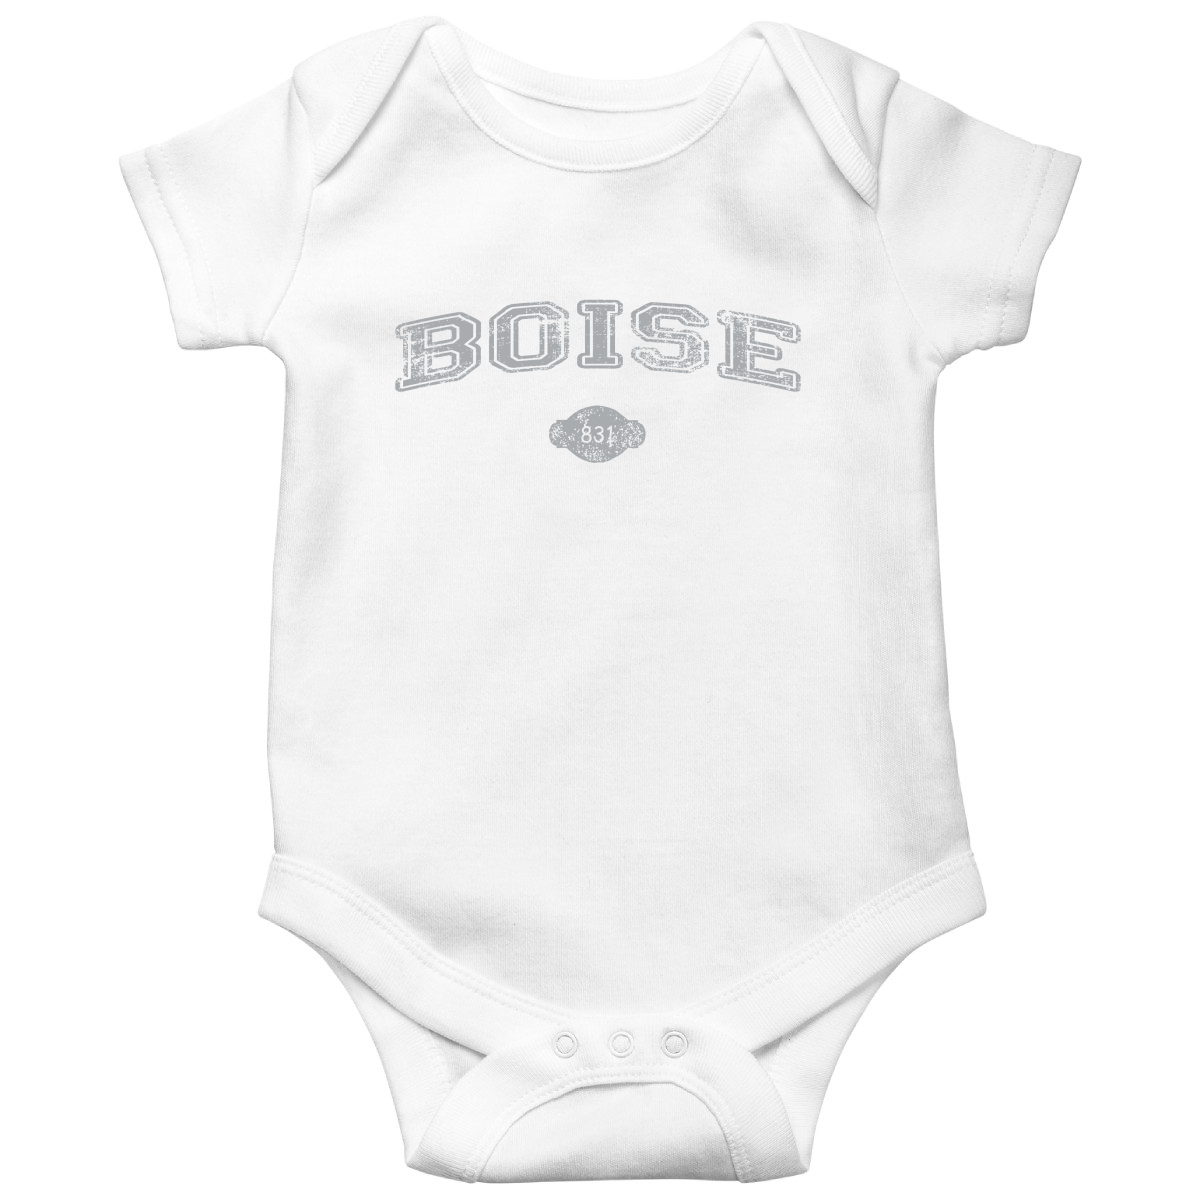 Boise 1863 Represent Baby Bodysuits